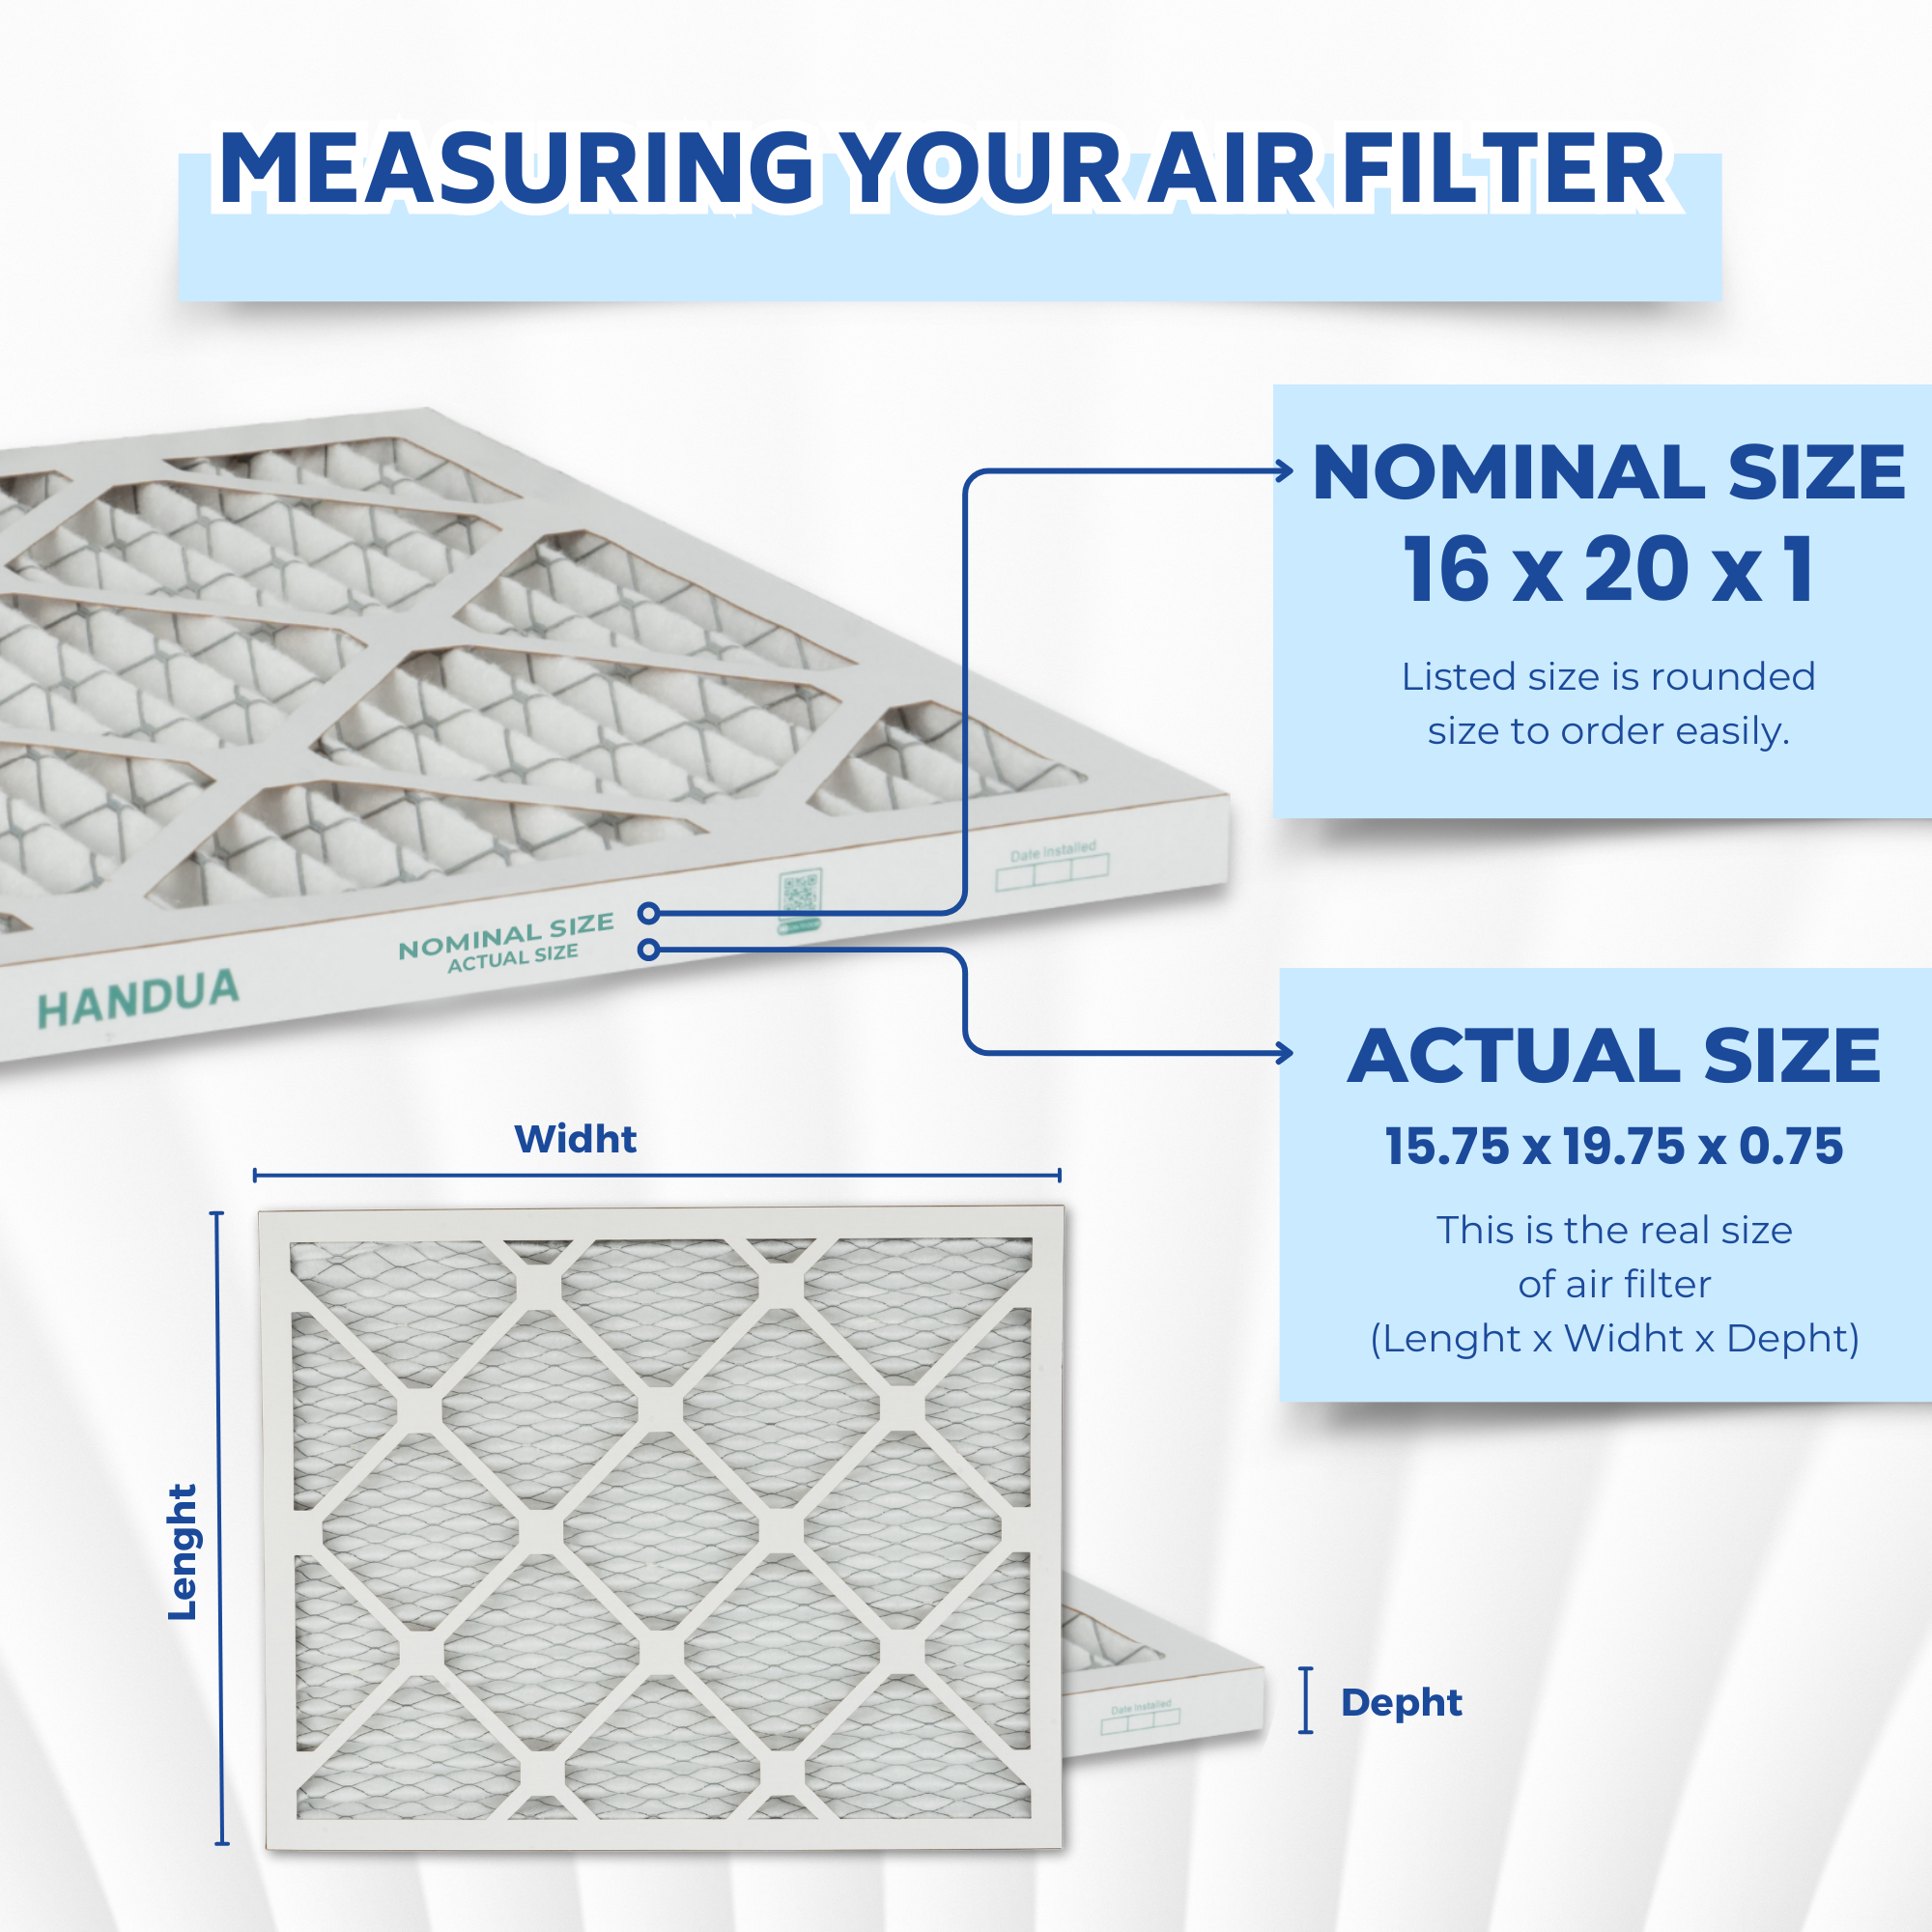 Handua 16x20x1 Air Filter MERV 11 Allergen Control, Plated Furnace AC Air Replacement Filter, 4 Pack (Actual Size: 15.75" x 19.75" x 0.75")